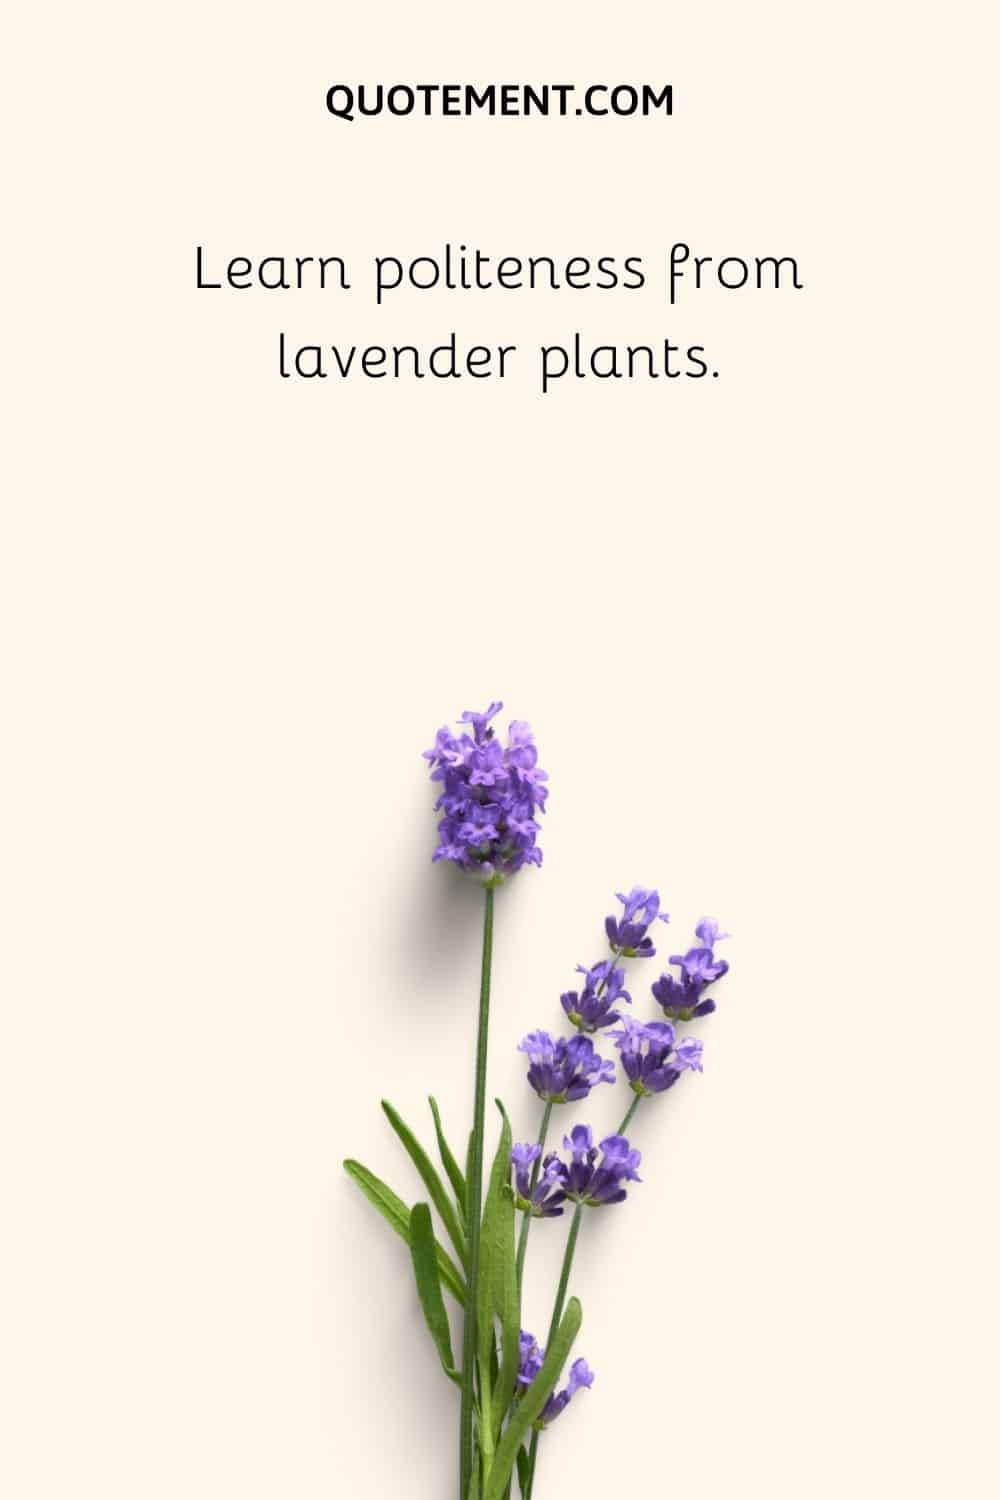 Learn politeness from lavender plants